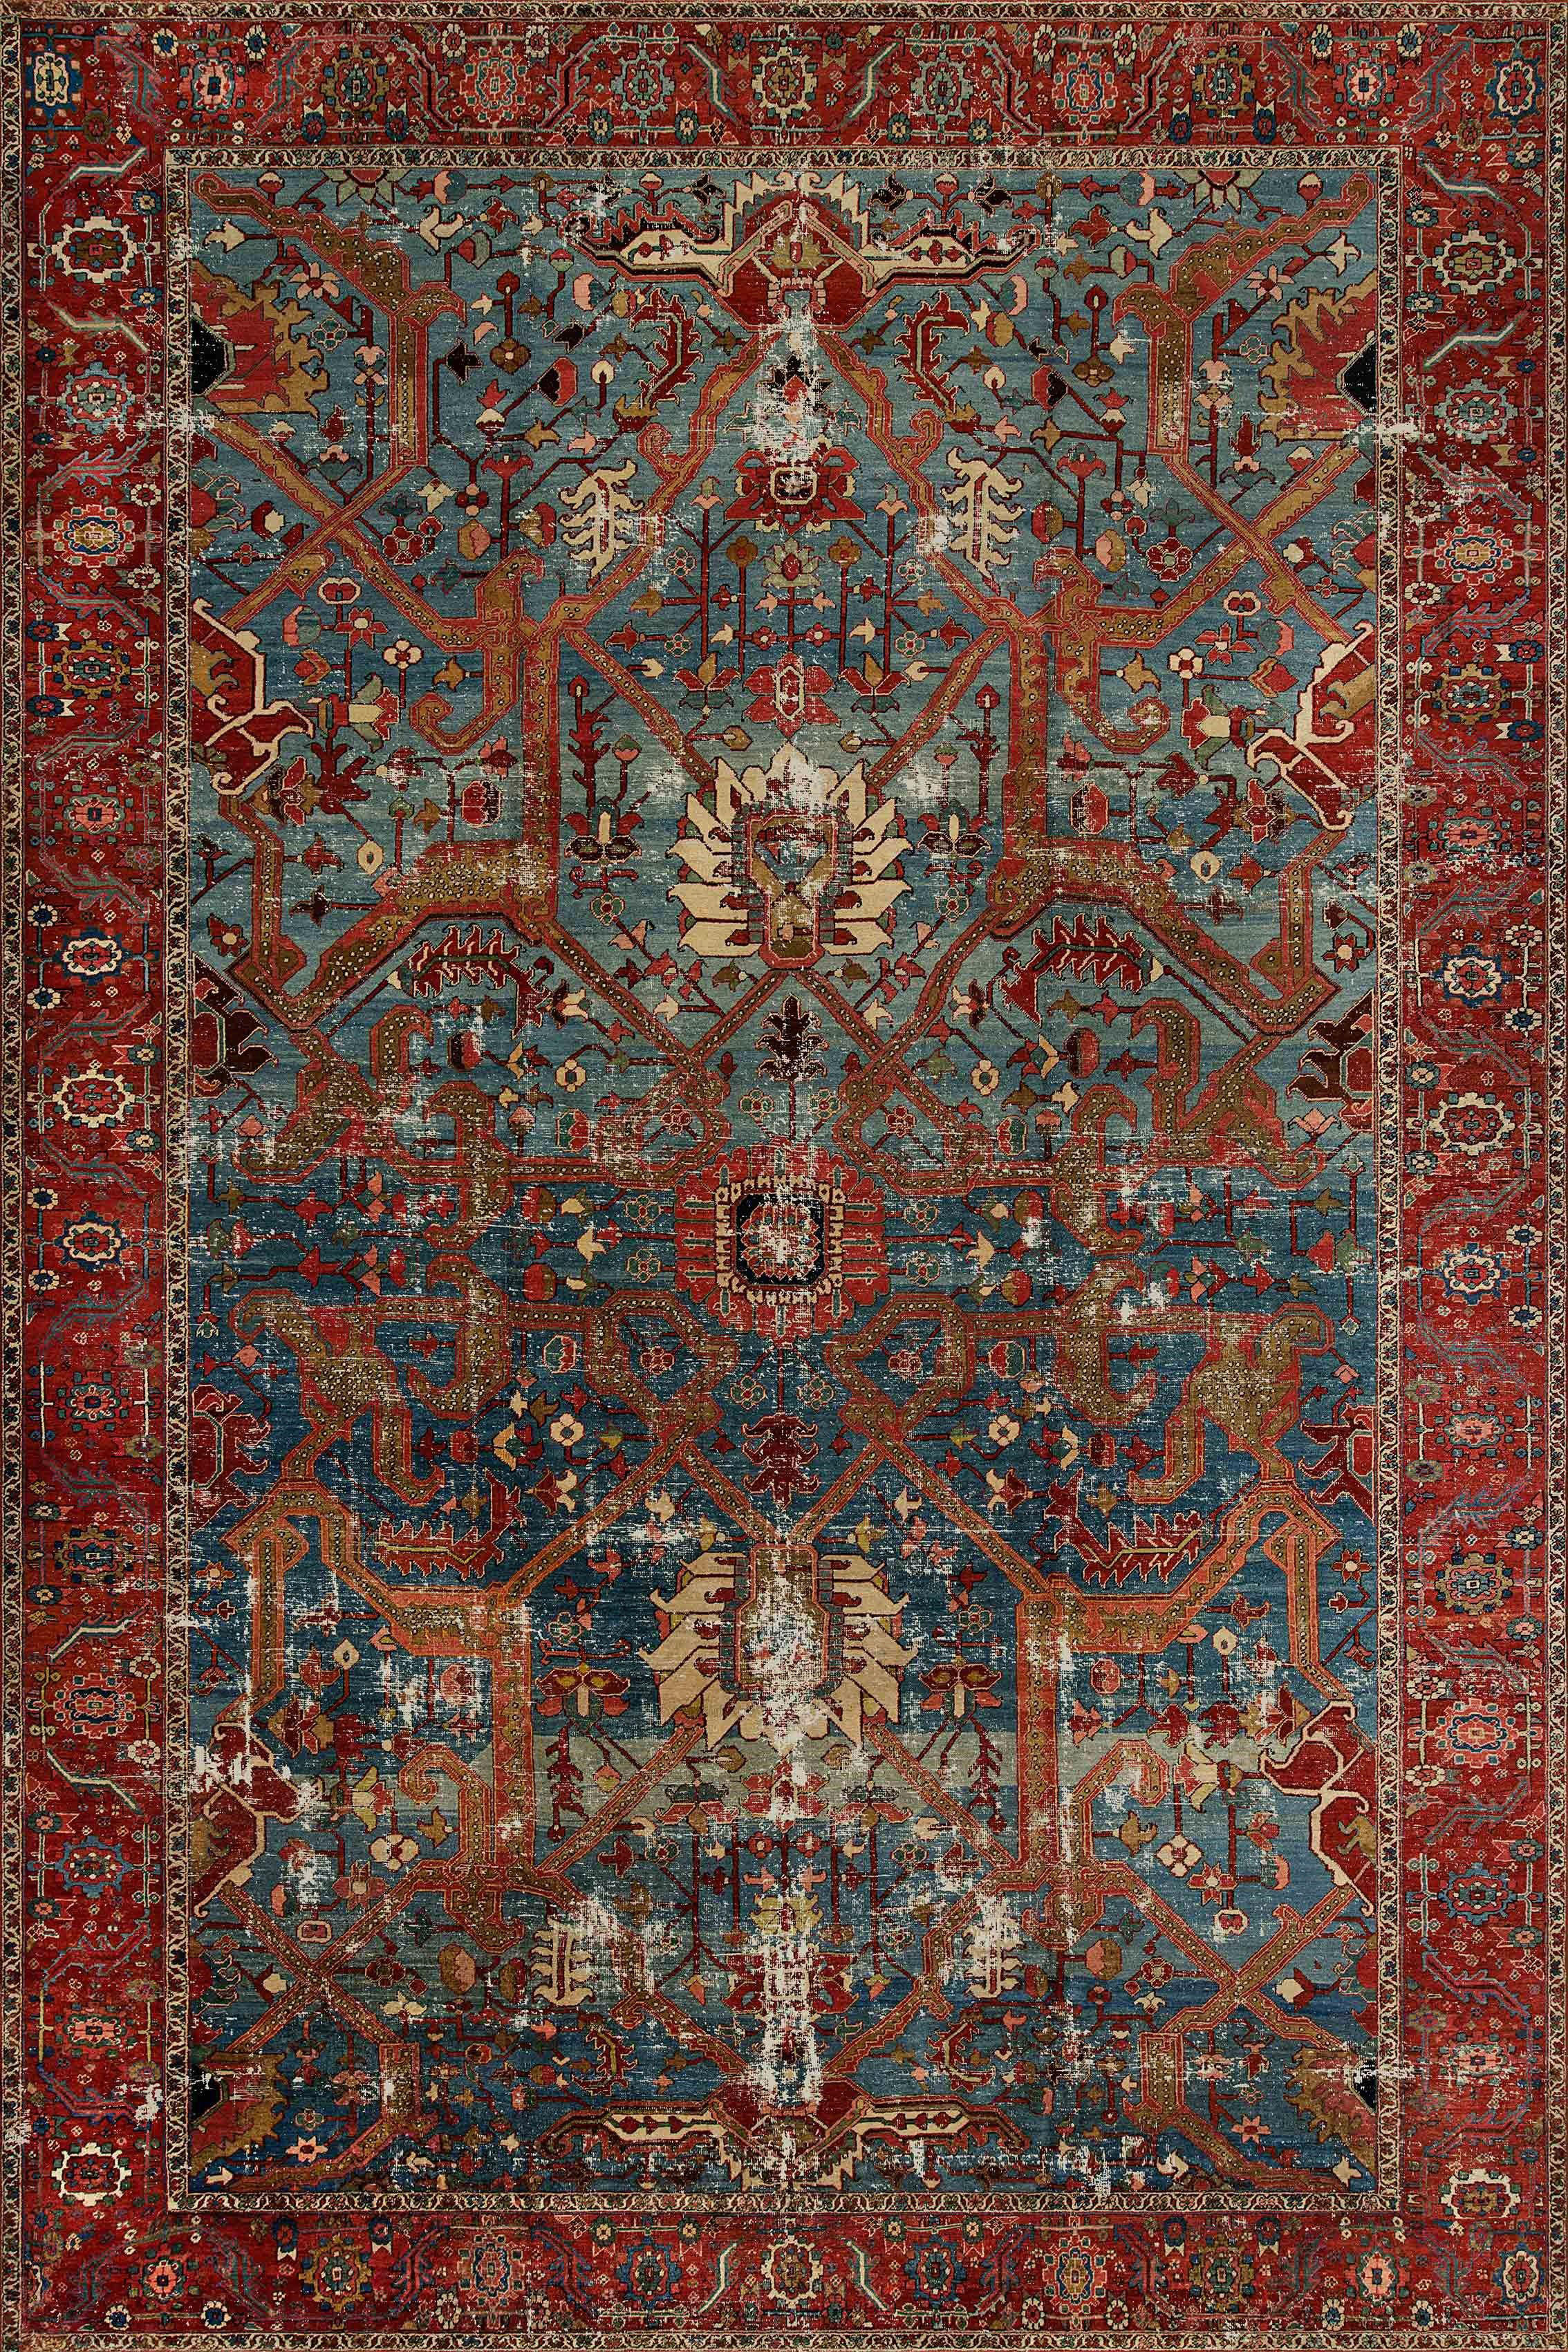 VINTAGE-TEPPICH  160/230 cm  Blau, Rot   - Blau/Rot, LIFESTYLE, Textil (160/230cm) - Novel